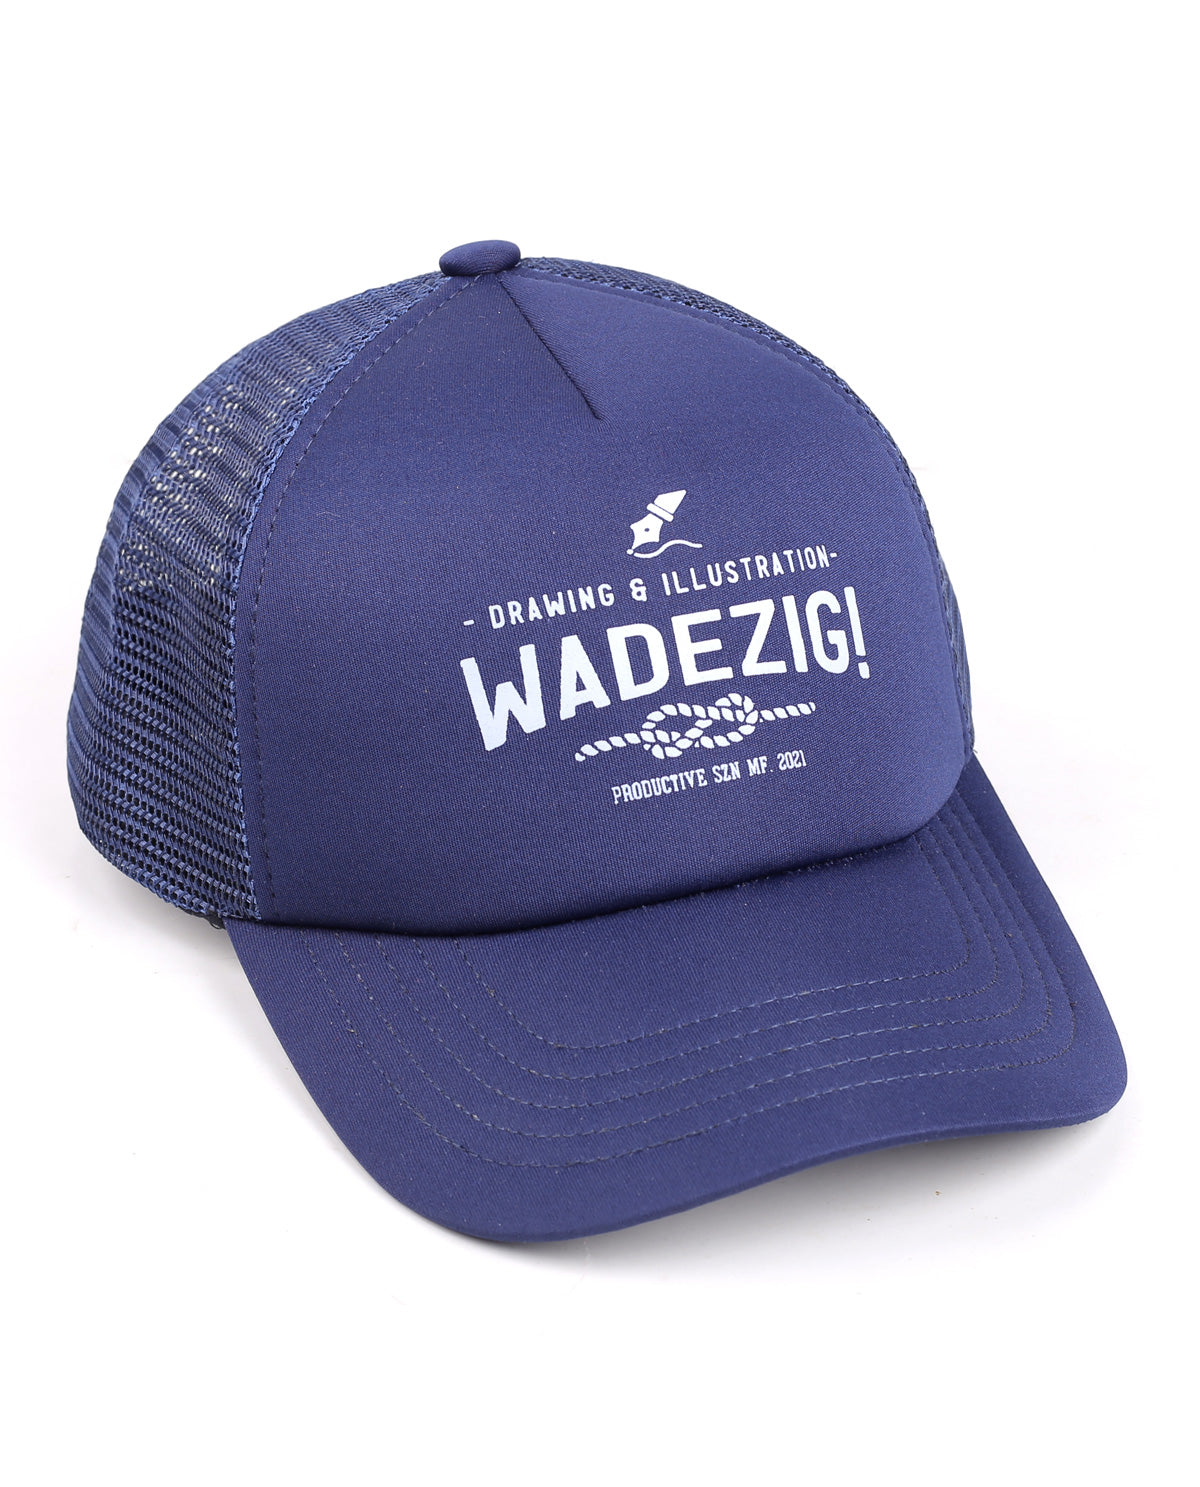 WADEZIG! HEADWEAR - ILLUSTRATION HAT